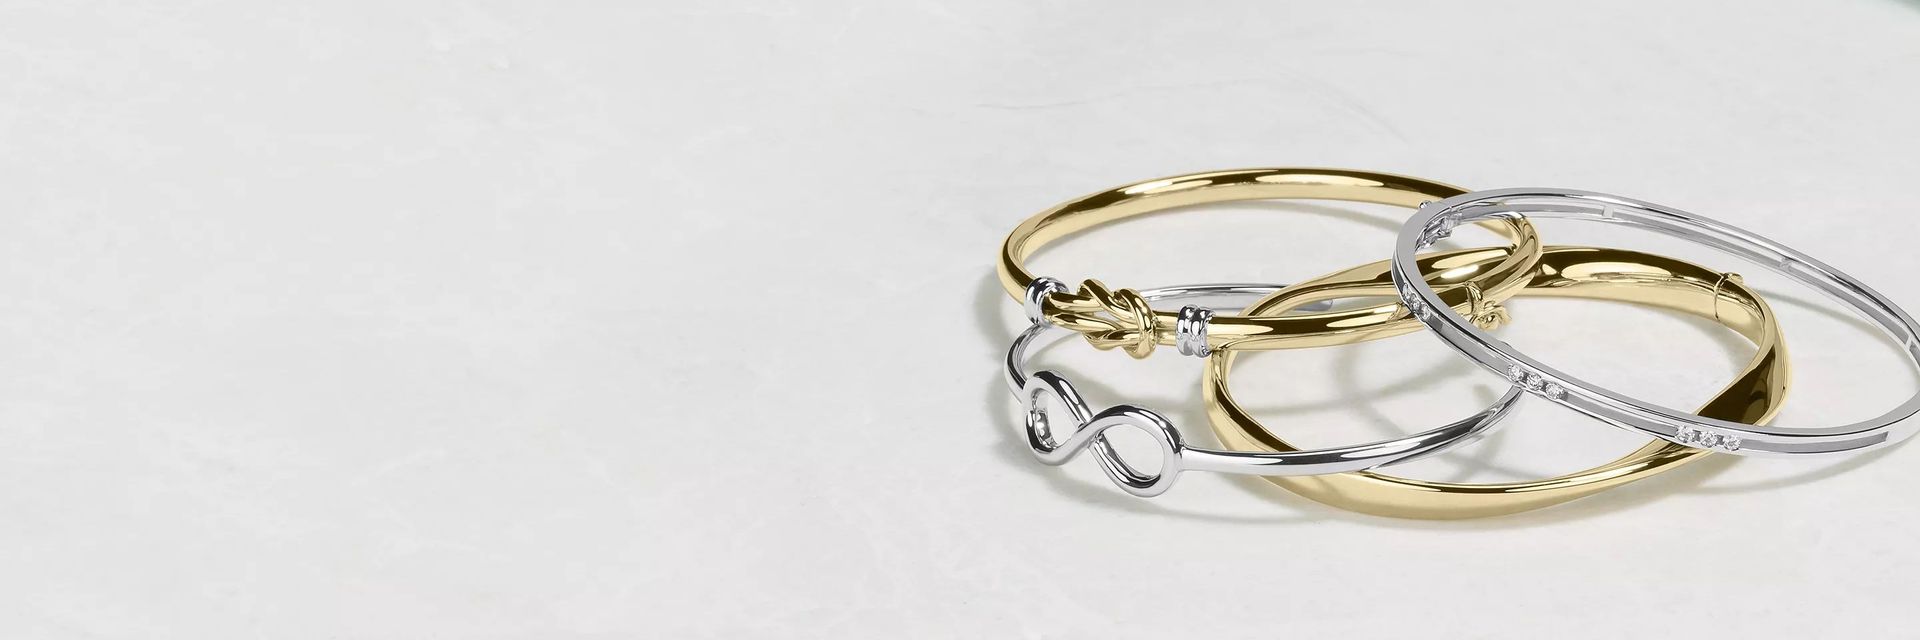 Stainless Steel Bangle Bracelets Twisted Cuff Bangles Wrist Bracelet  Jewelry 1pc | eBay